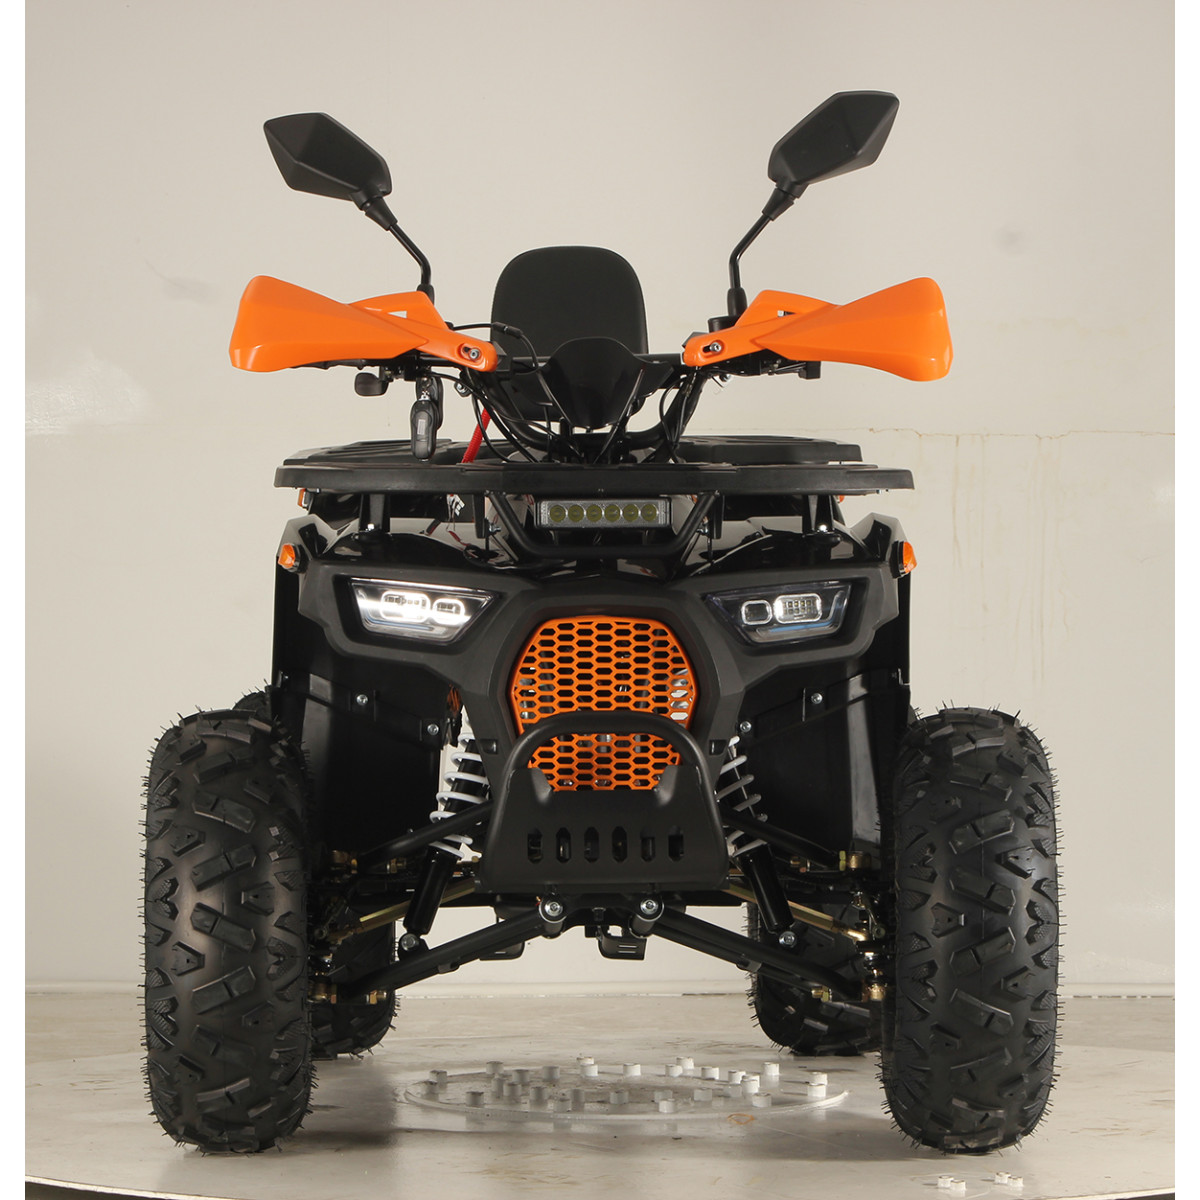 Квадроцикл FORTE ATV125P Чорно-помаранчевий